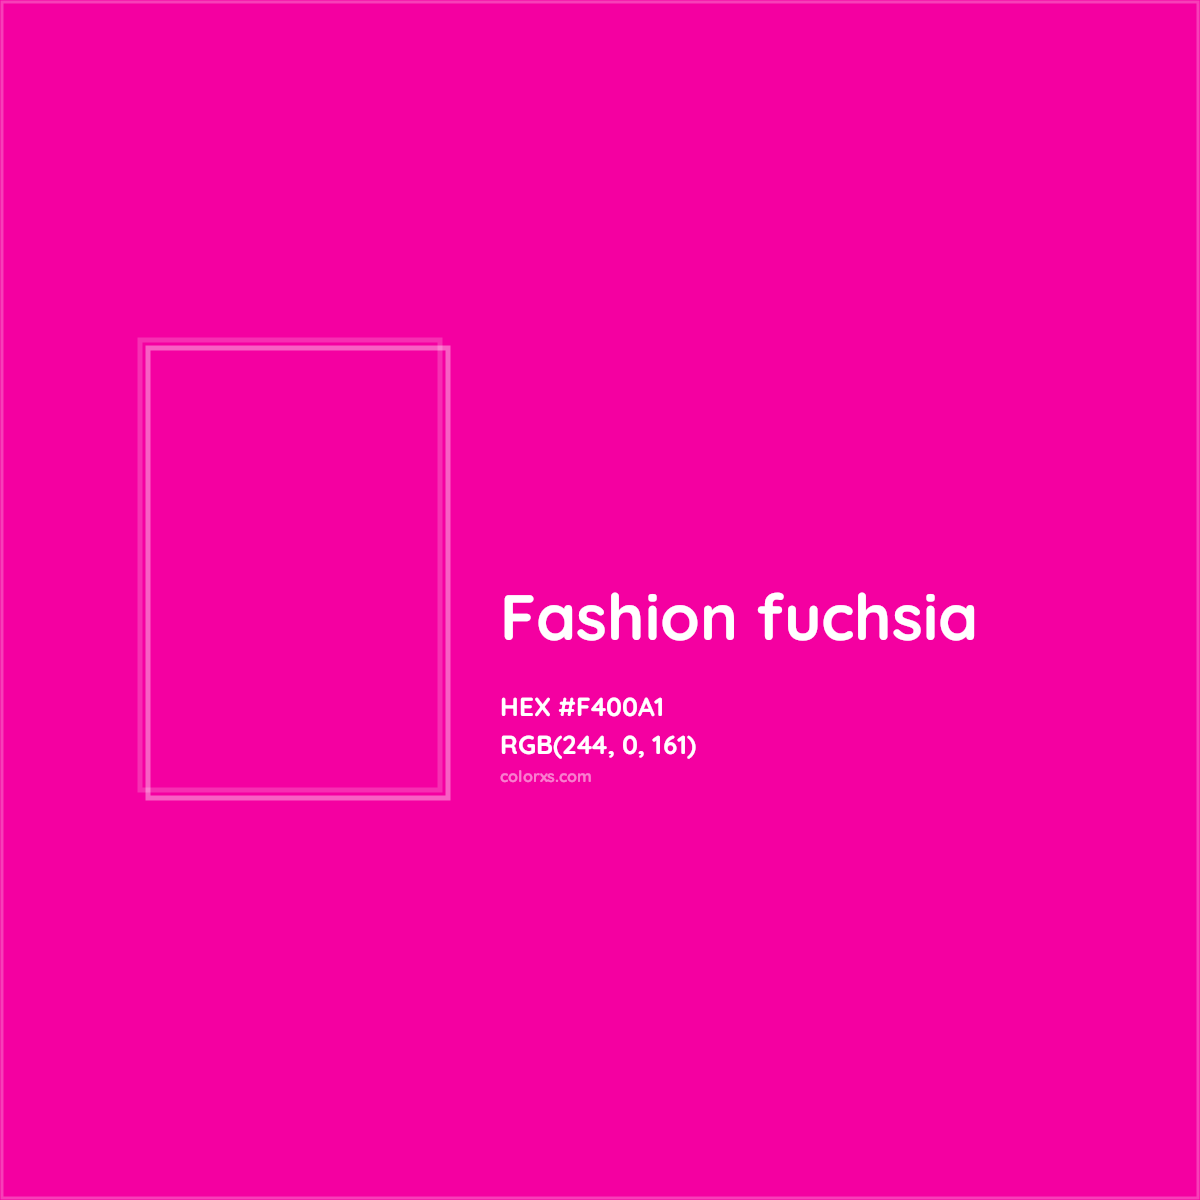 HEX #F400A1 Fashion fuchsia Other - Color Code